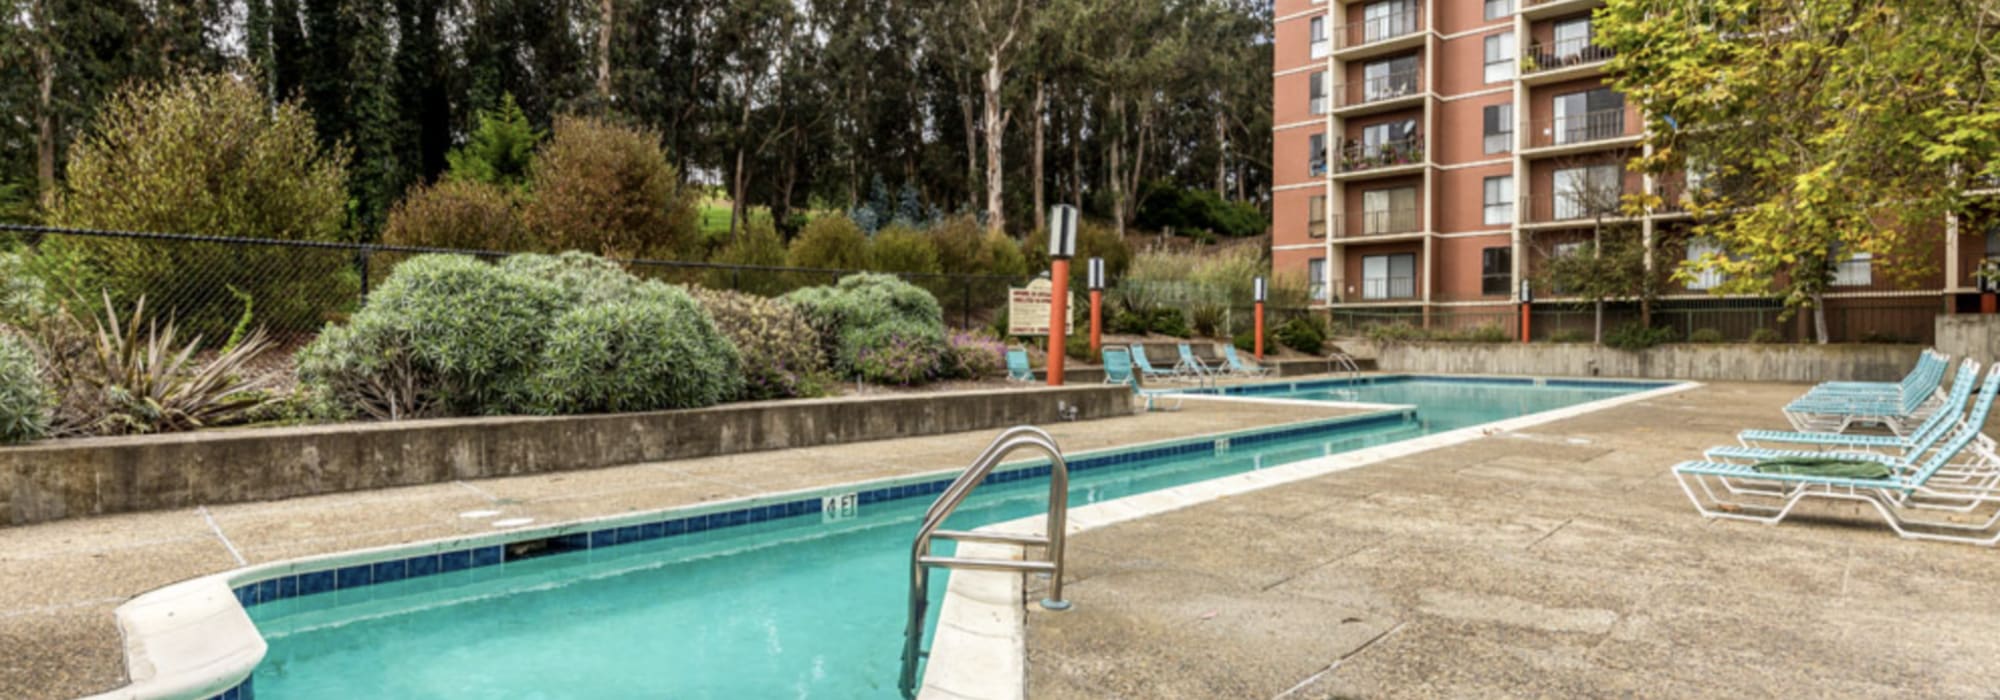 Our beautiful swimming pool at Lakewood Apartments at Lake Merced in San Francisco, California